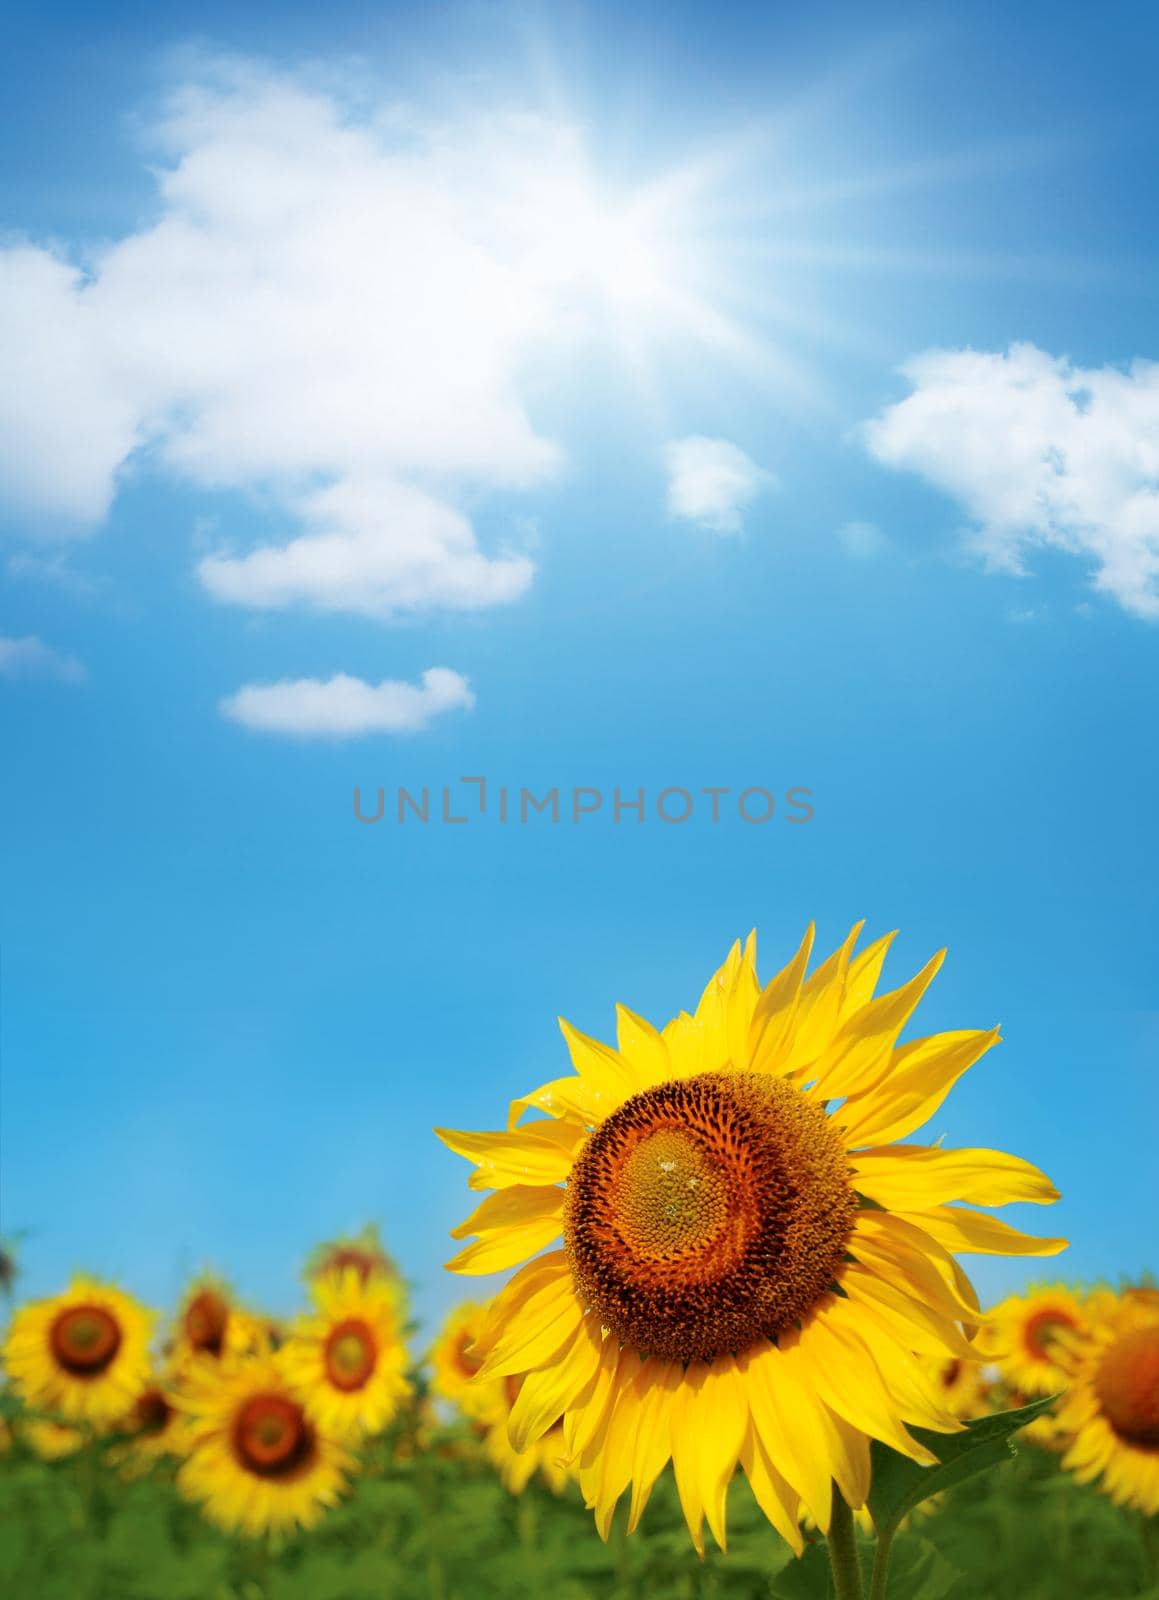 beautiful sunflowers with blue sky and sunburst